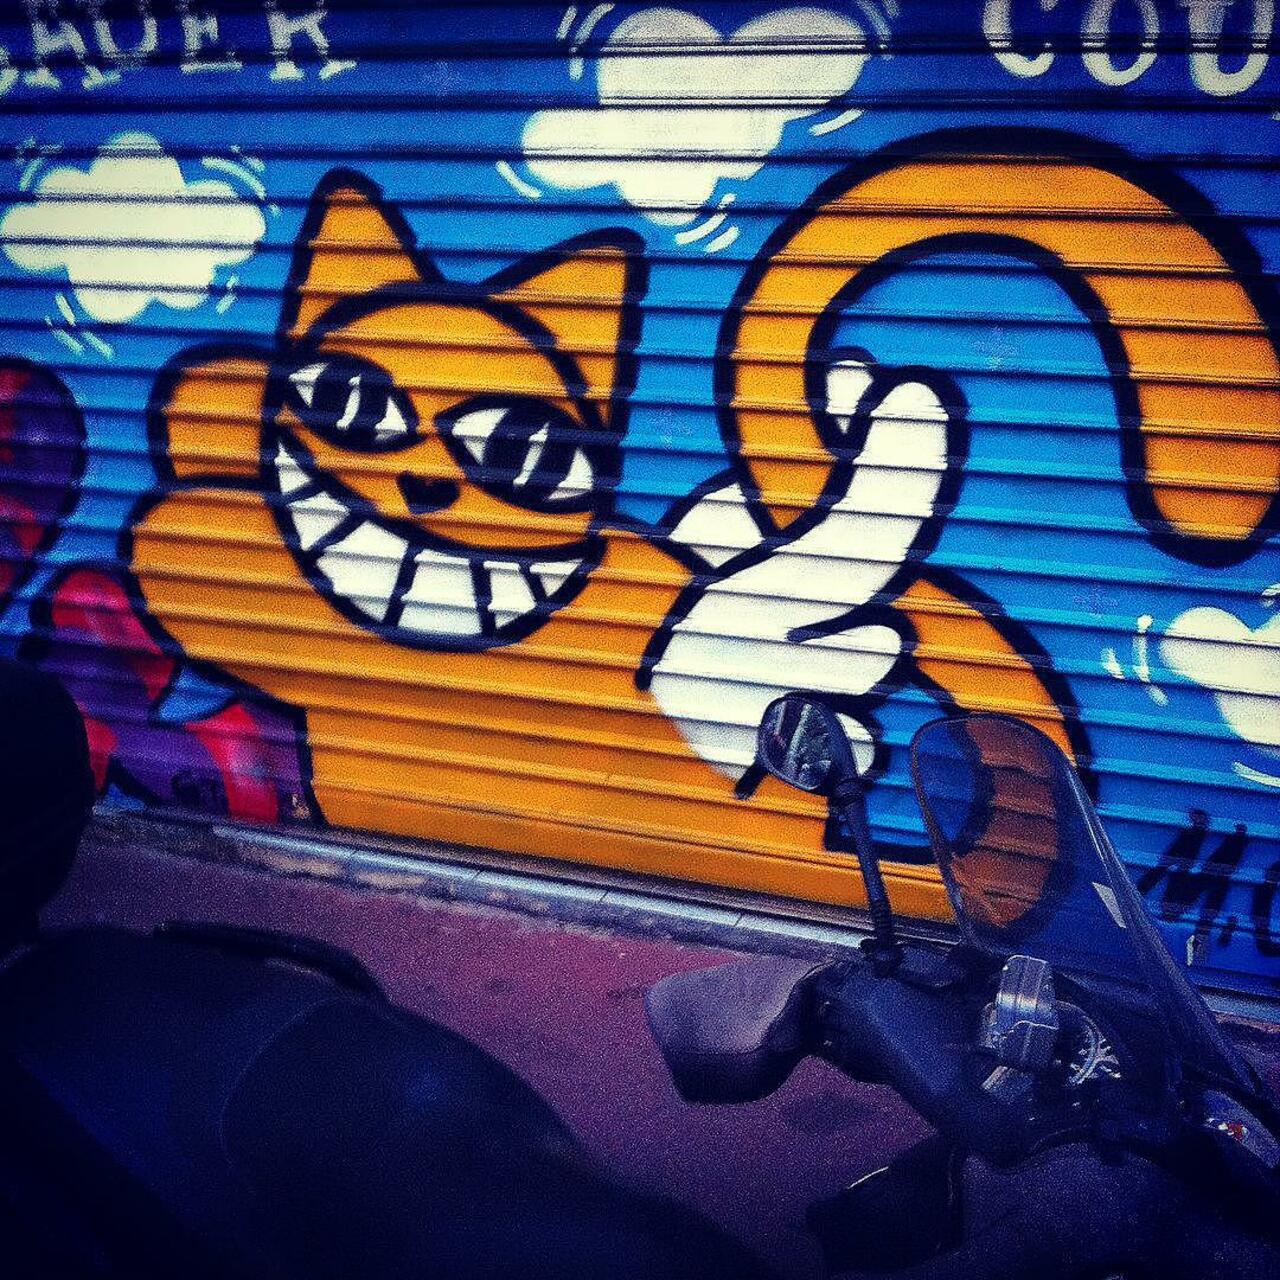 circumjacent_fr: #Paris #graffiti photo by anne__sofy http://ift.tt/1P5tlUI #StreetArt http://t.co/qeUIU8OufZ